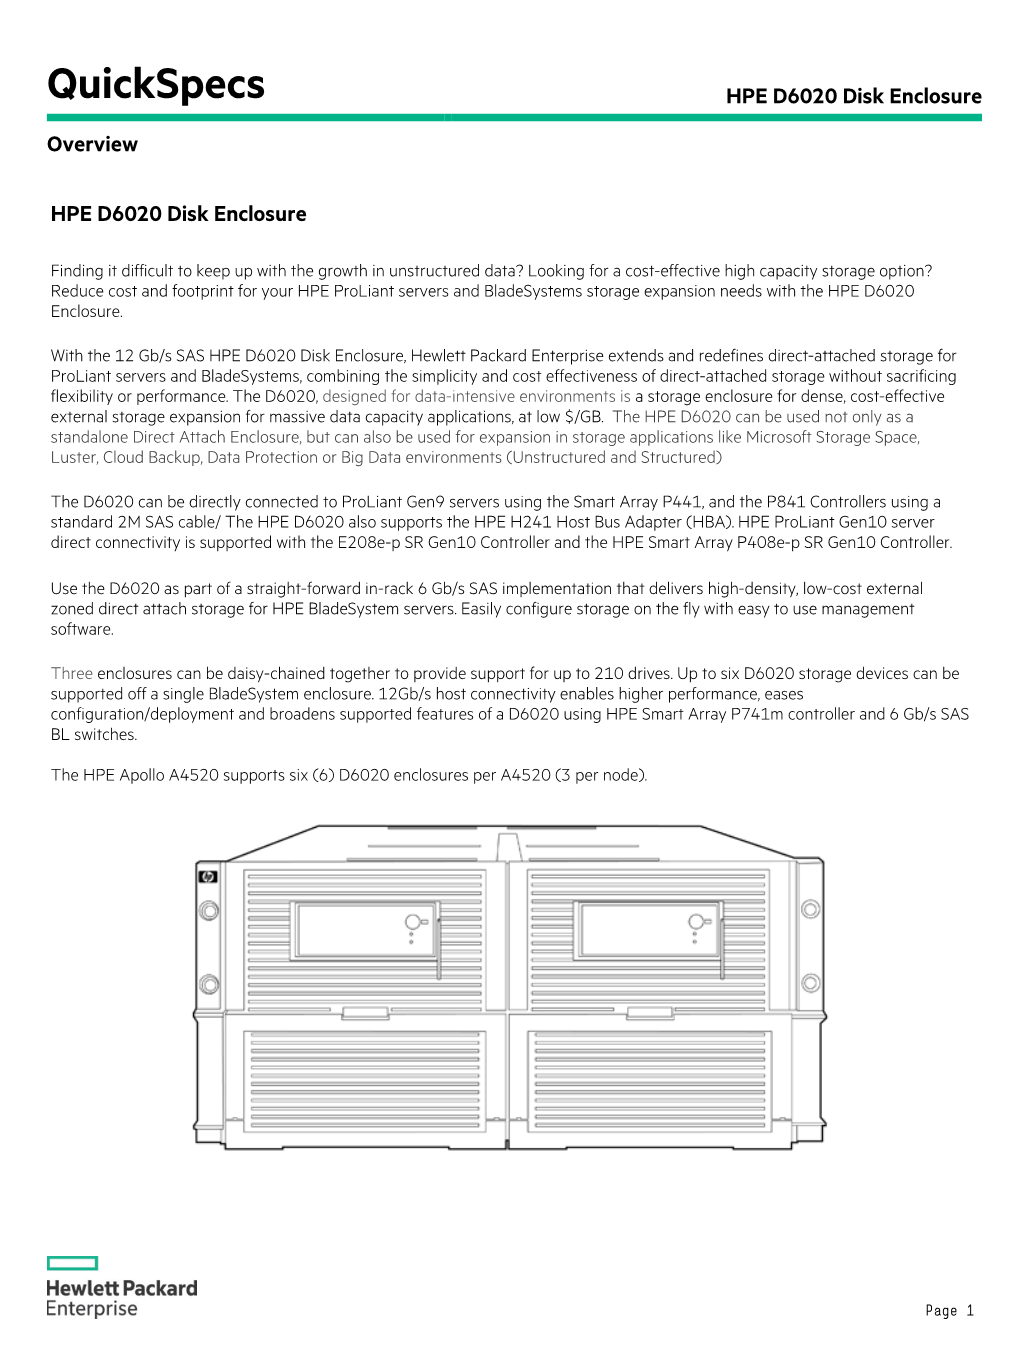 HPE D6020 Disk Enclosure Overview